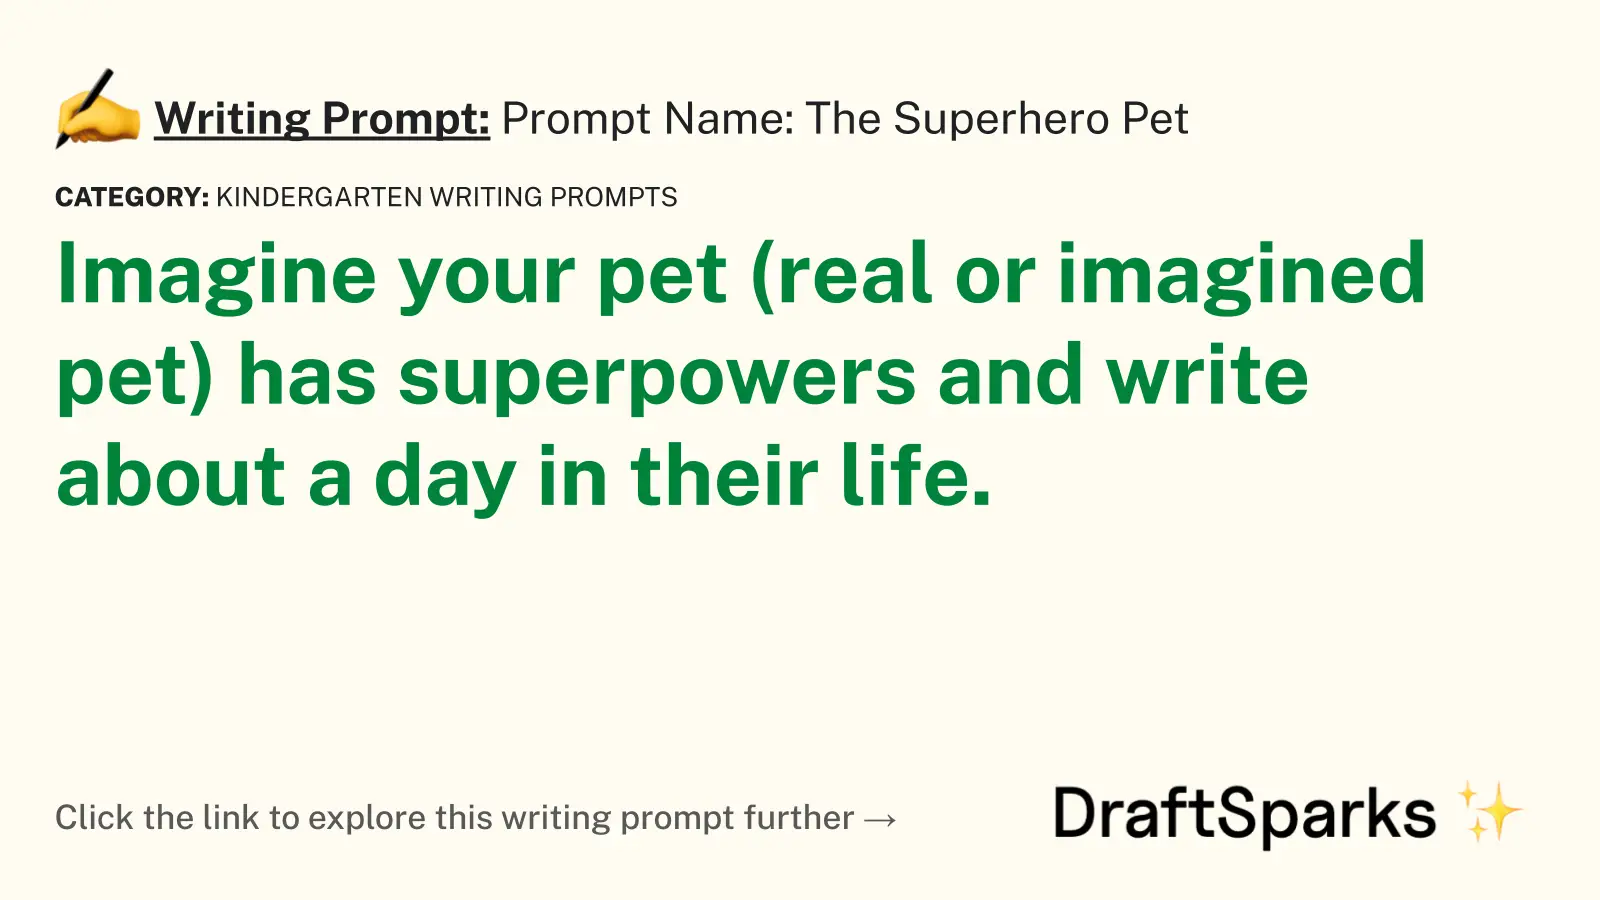 Prompt Name: The Superhero Pet